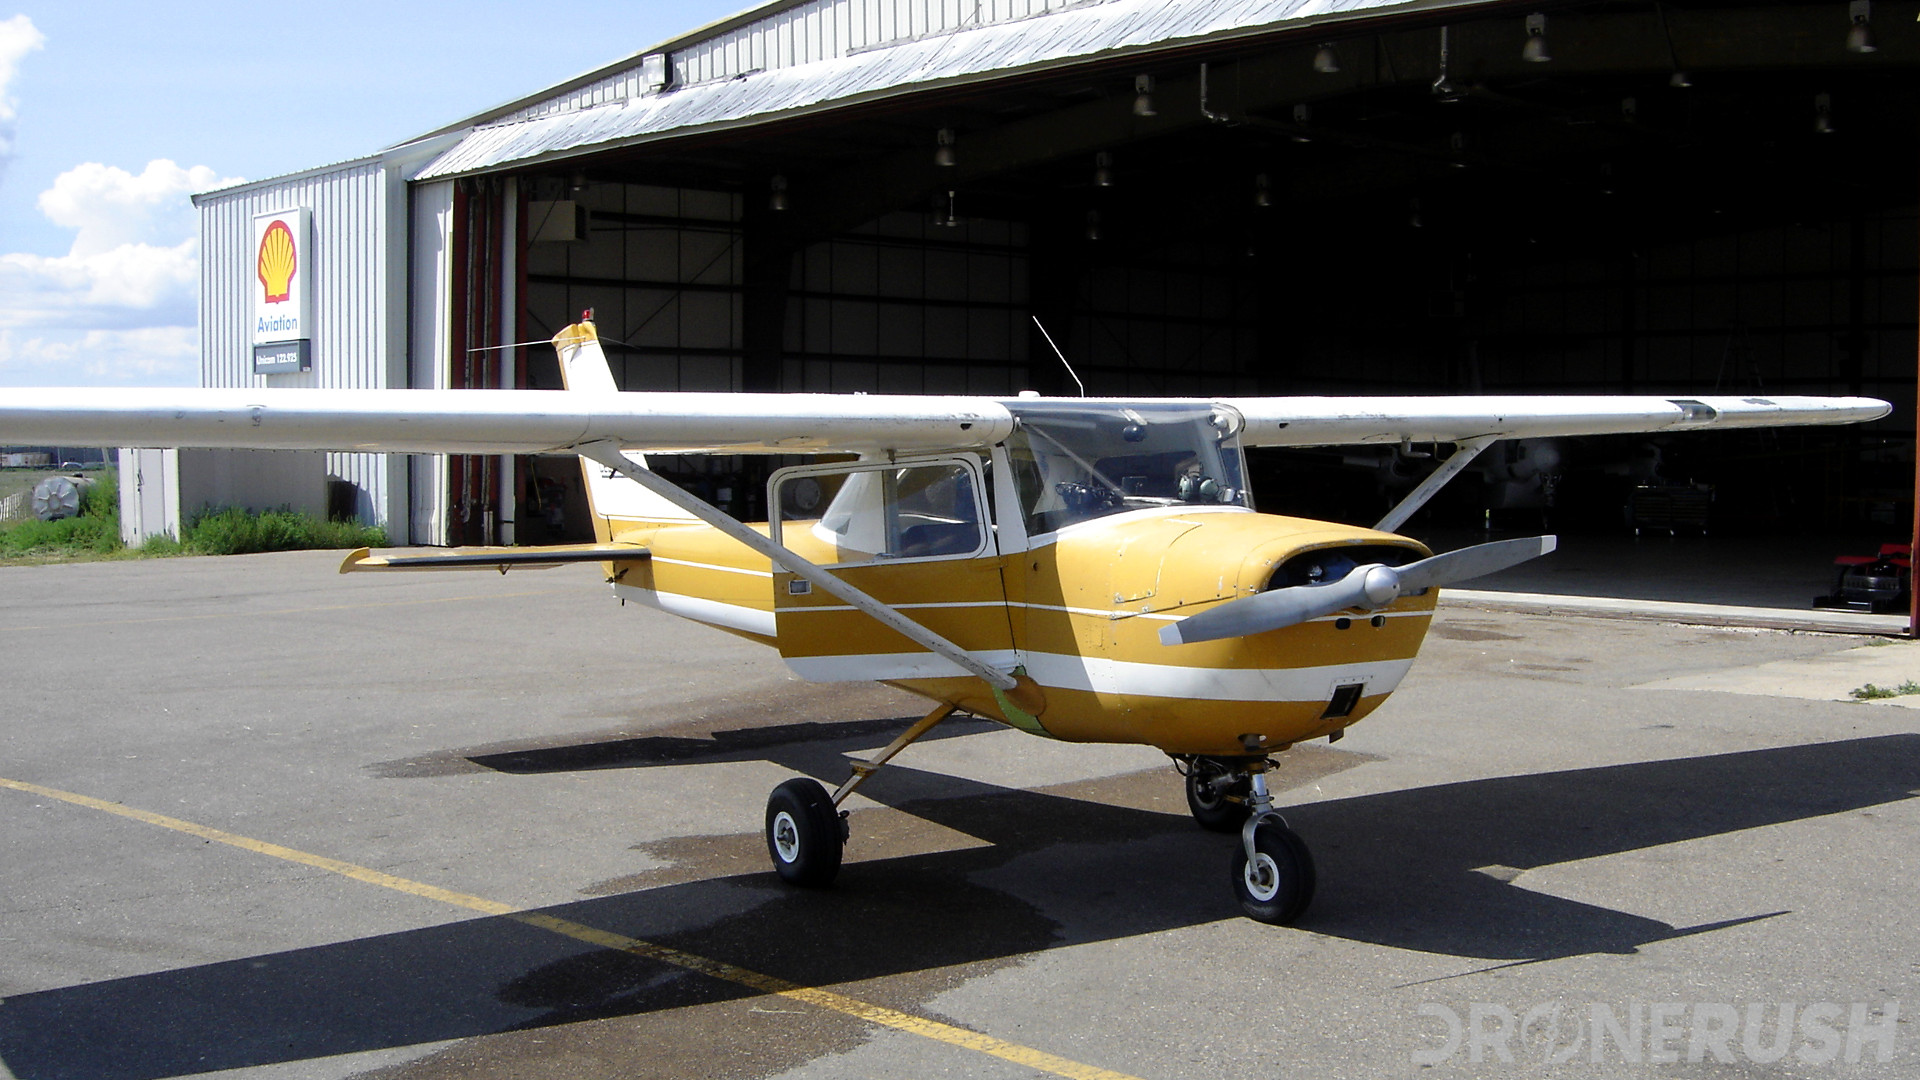 Jonathan Flew a Cessna airplane